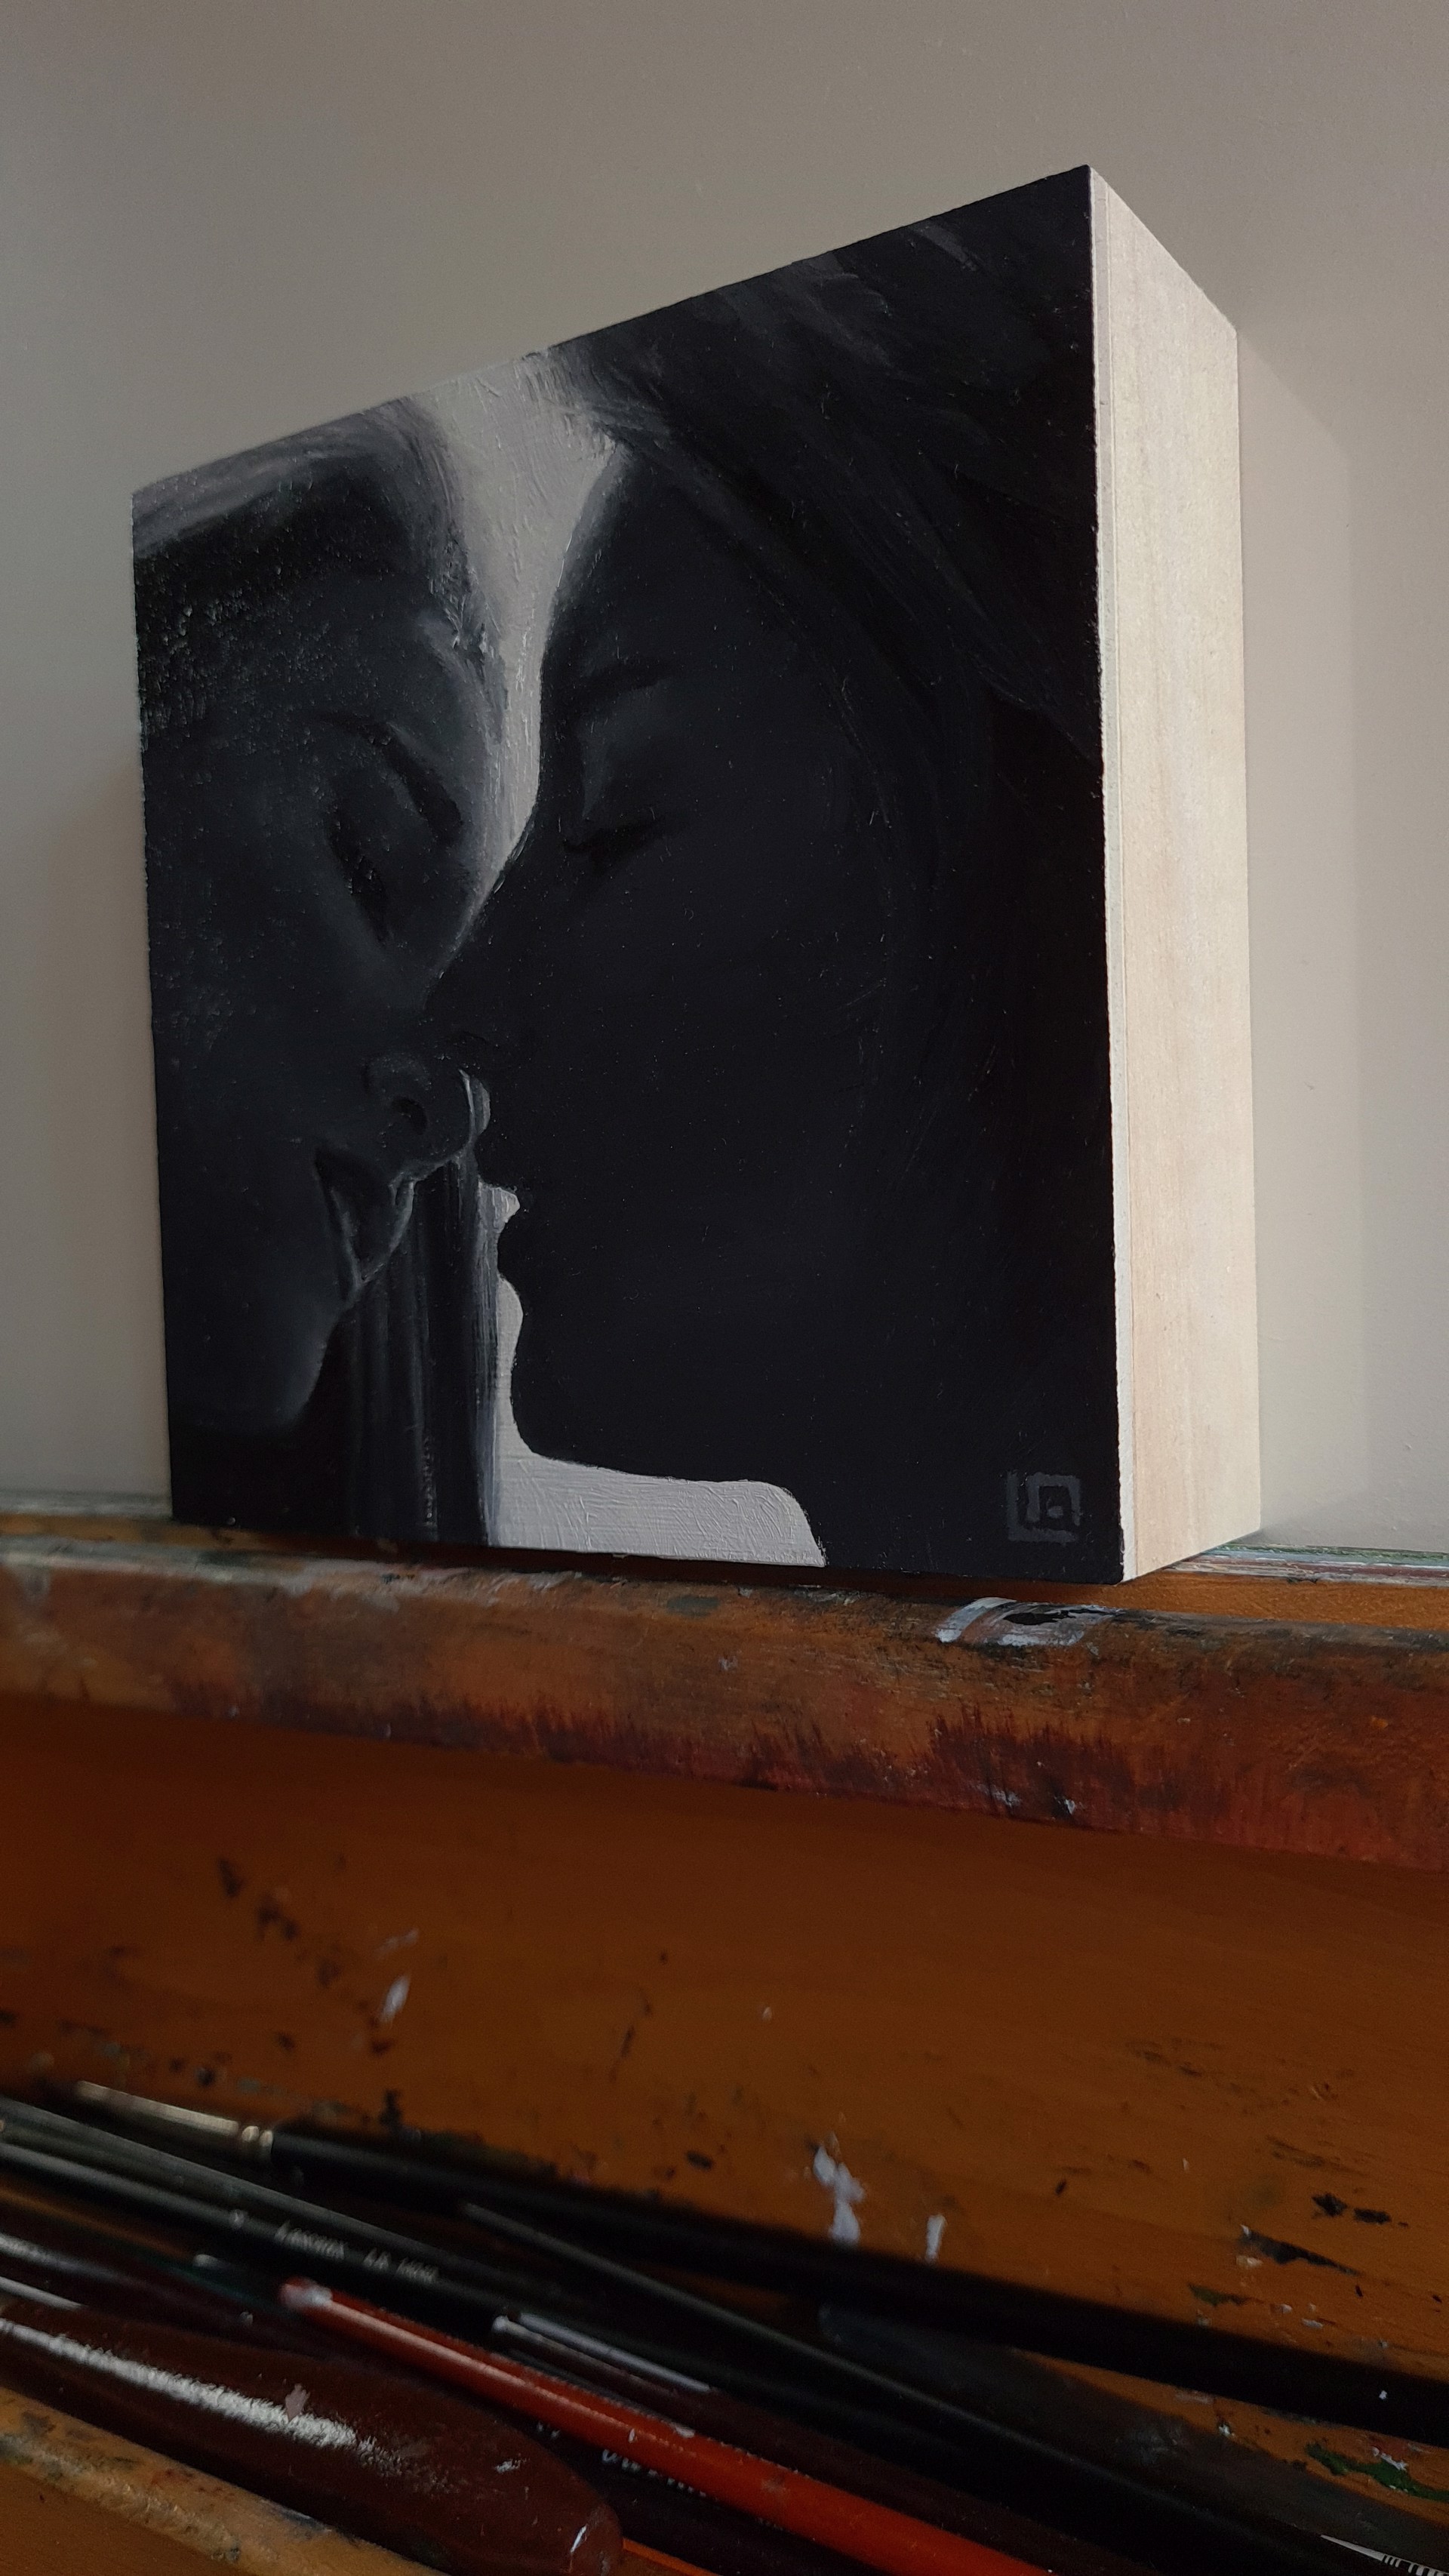 The Kiss #7 by Linda Delahaye